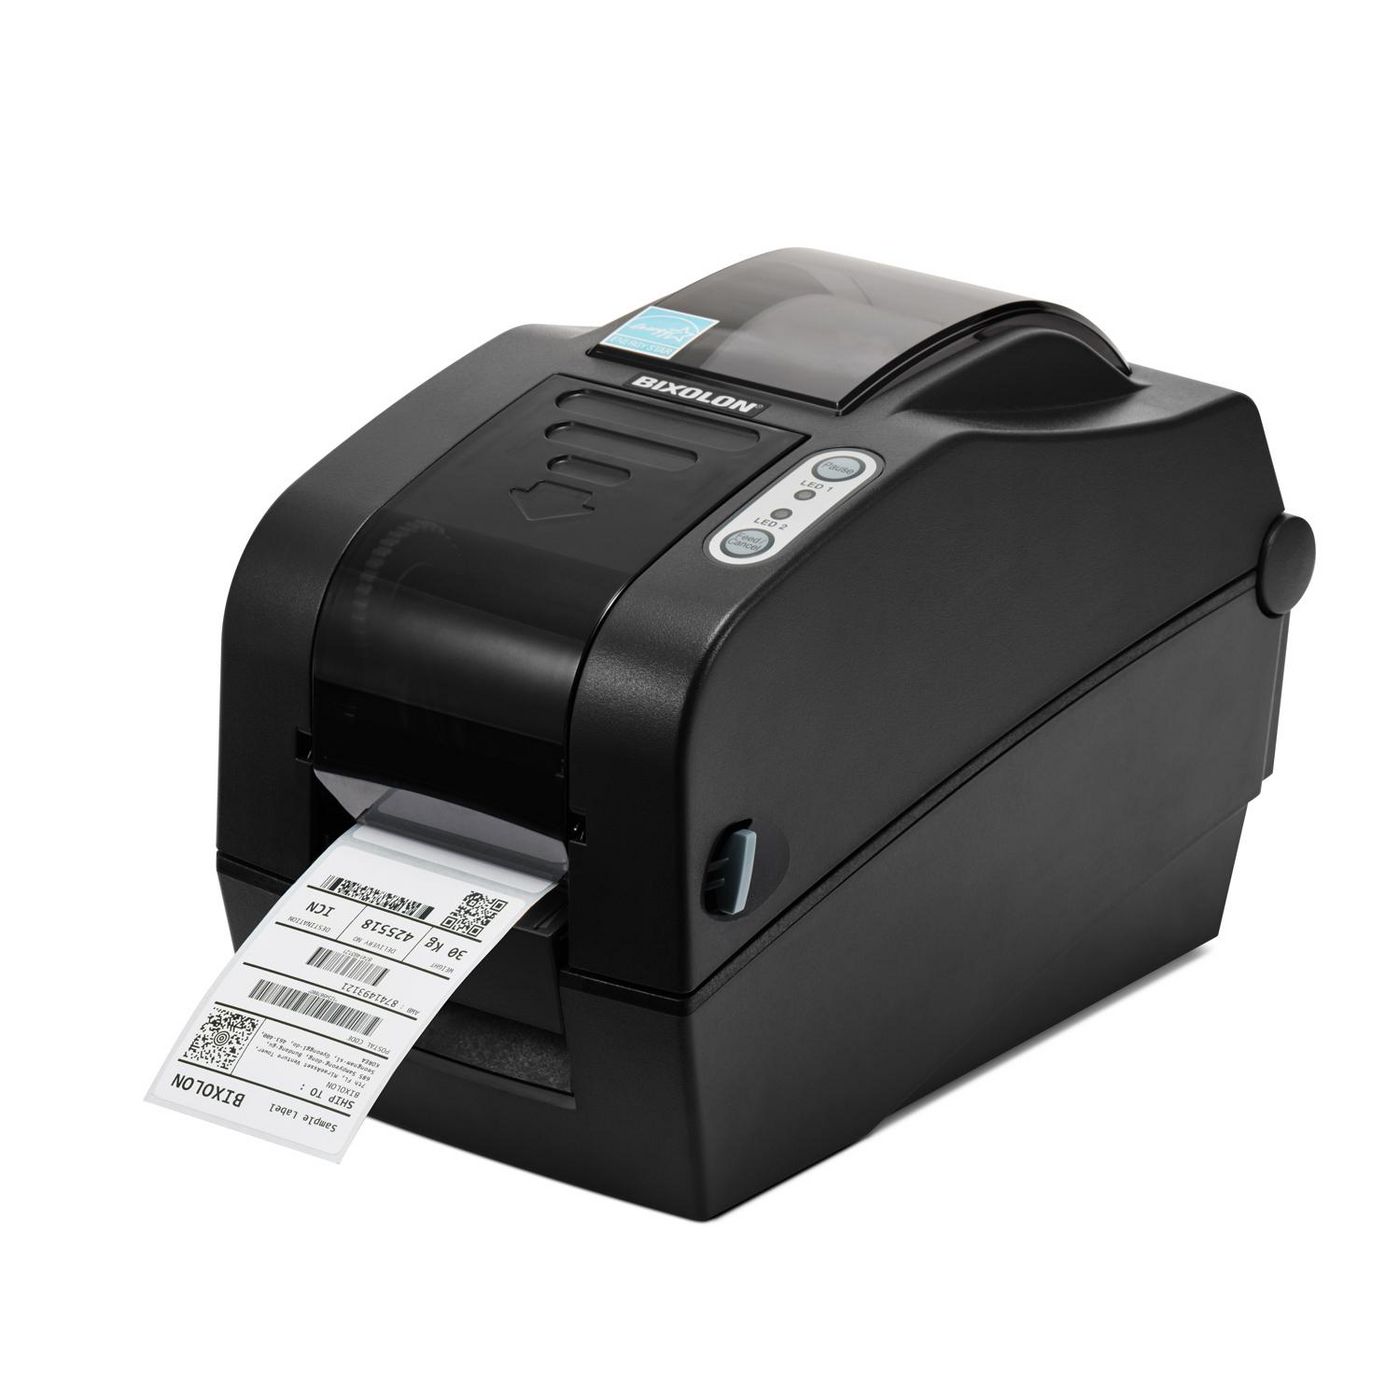 Slp-tx220g -  Label Printer - Direct Thermal - USB / Parallel